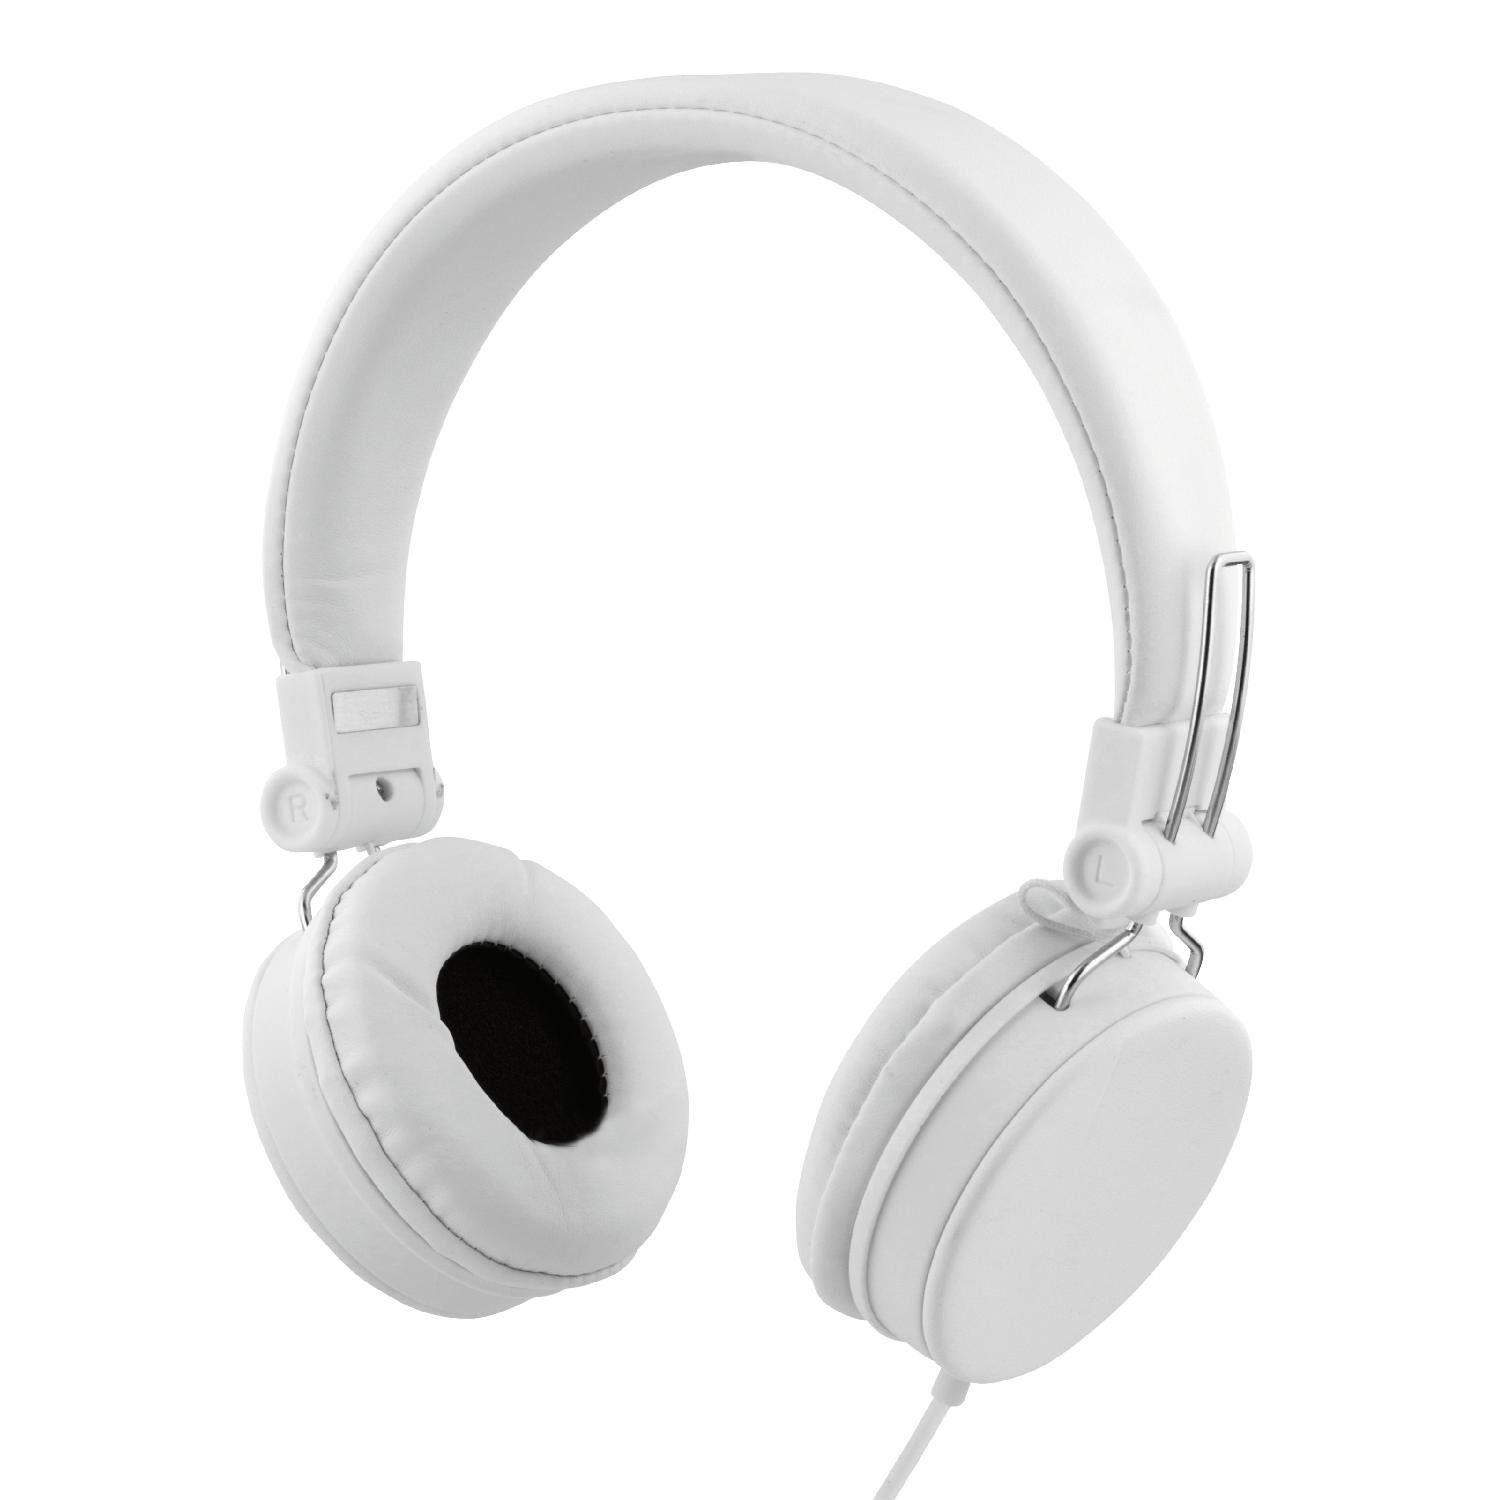 STREETZ Kopfhörer 1,2m Kabel 3.5mm Klinkenanschluss Ohrpolster On-Ear-Kopfhörer (integriertes Mikrofon, faltbares Headset, inkl. 5 Jahre Herstellergarantie) weiß | On-Ear-Kopfhörer